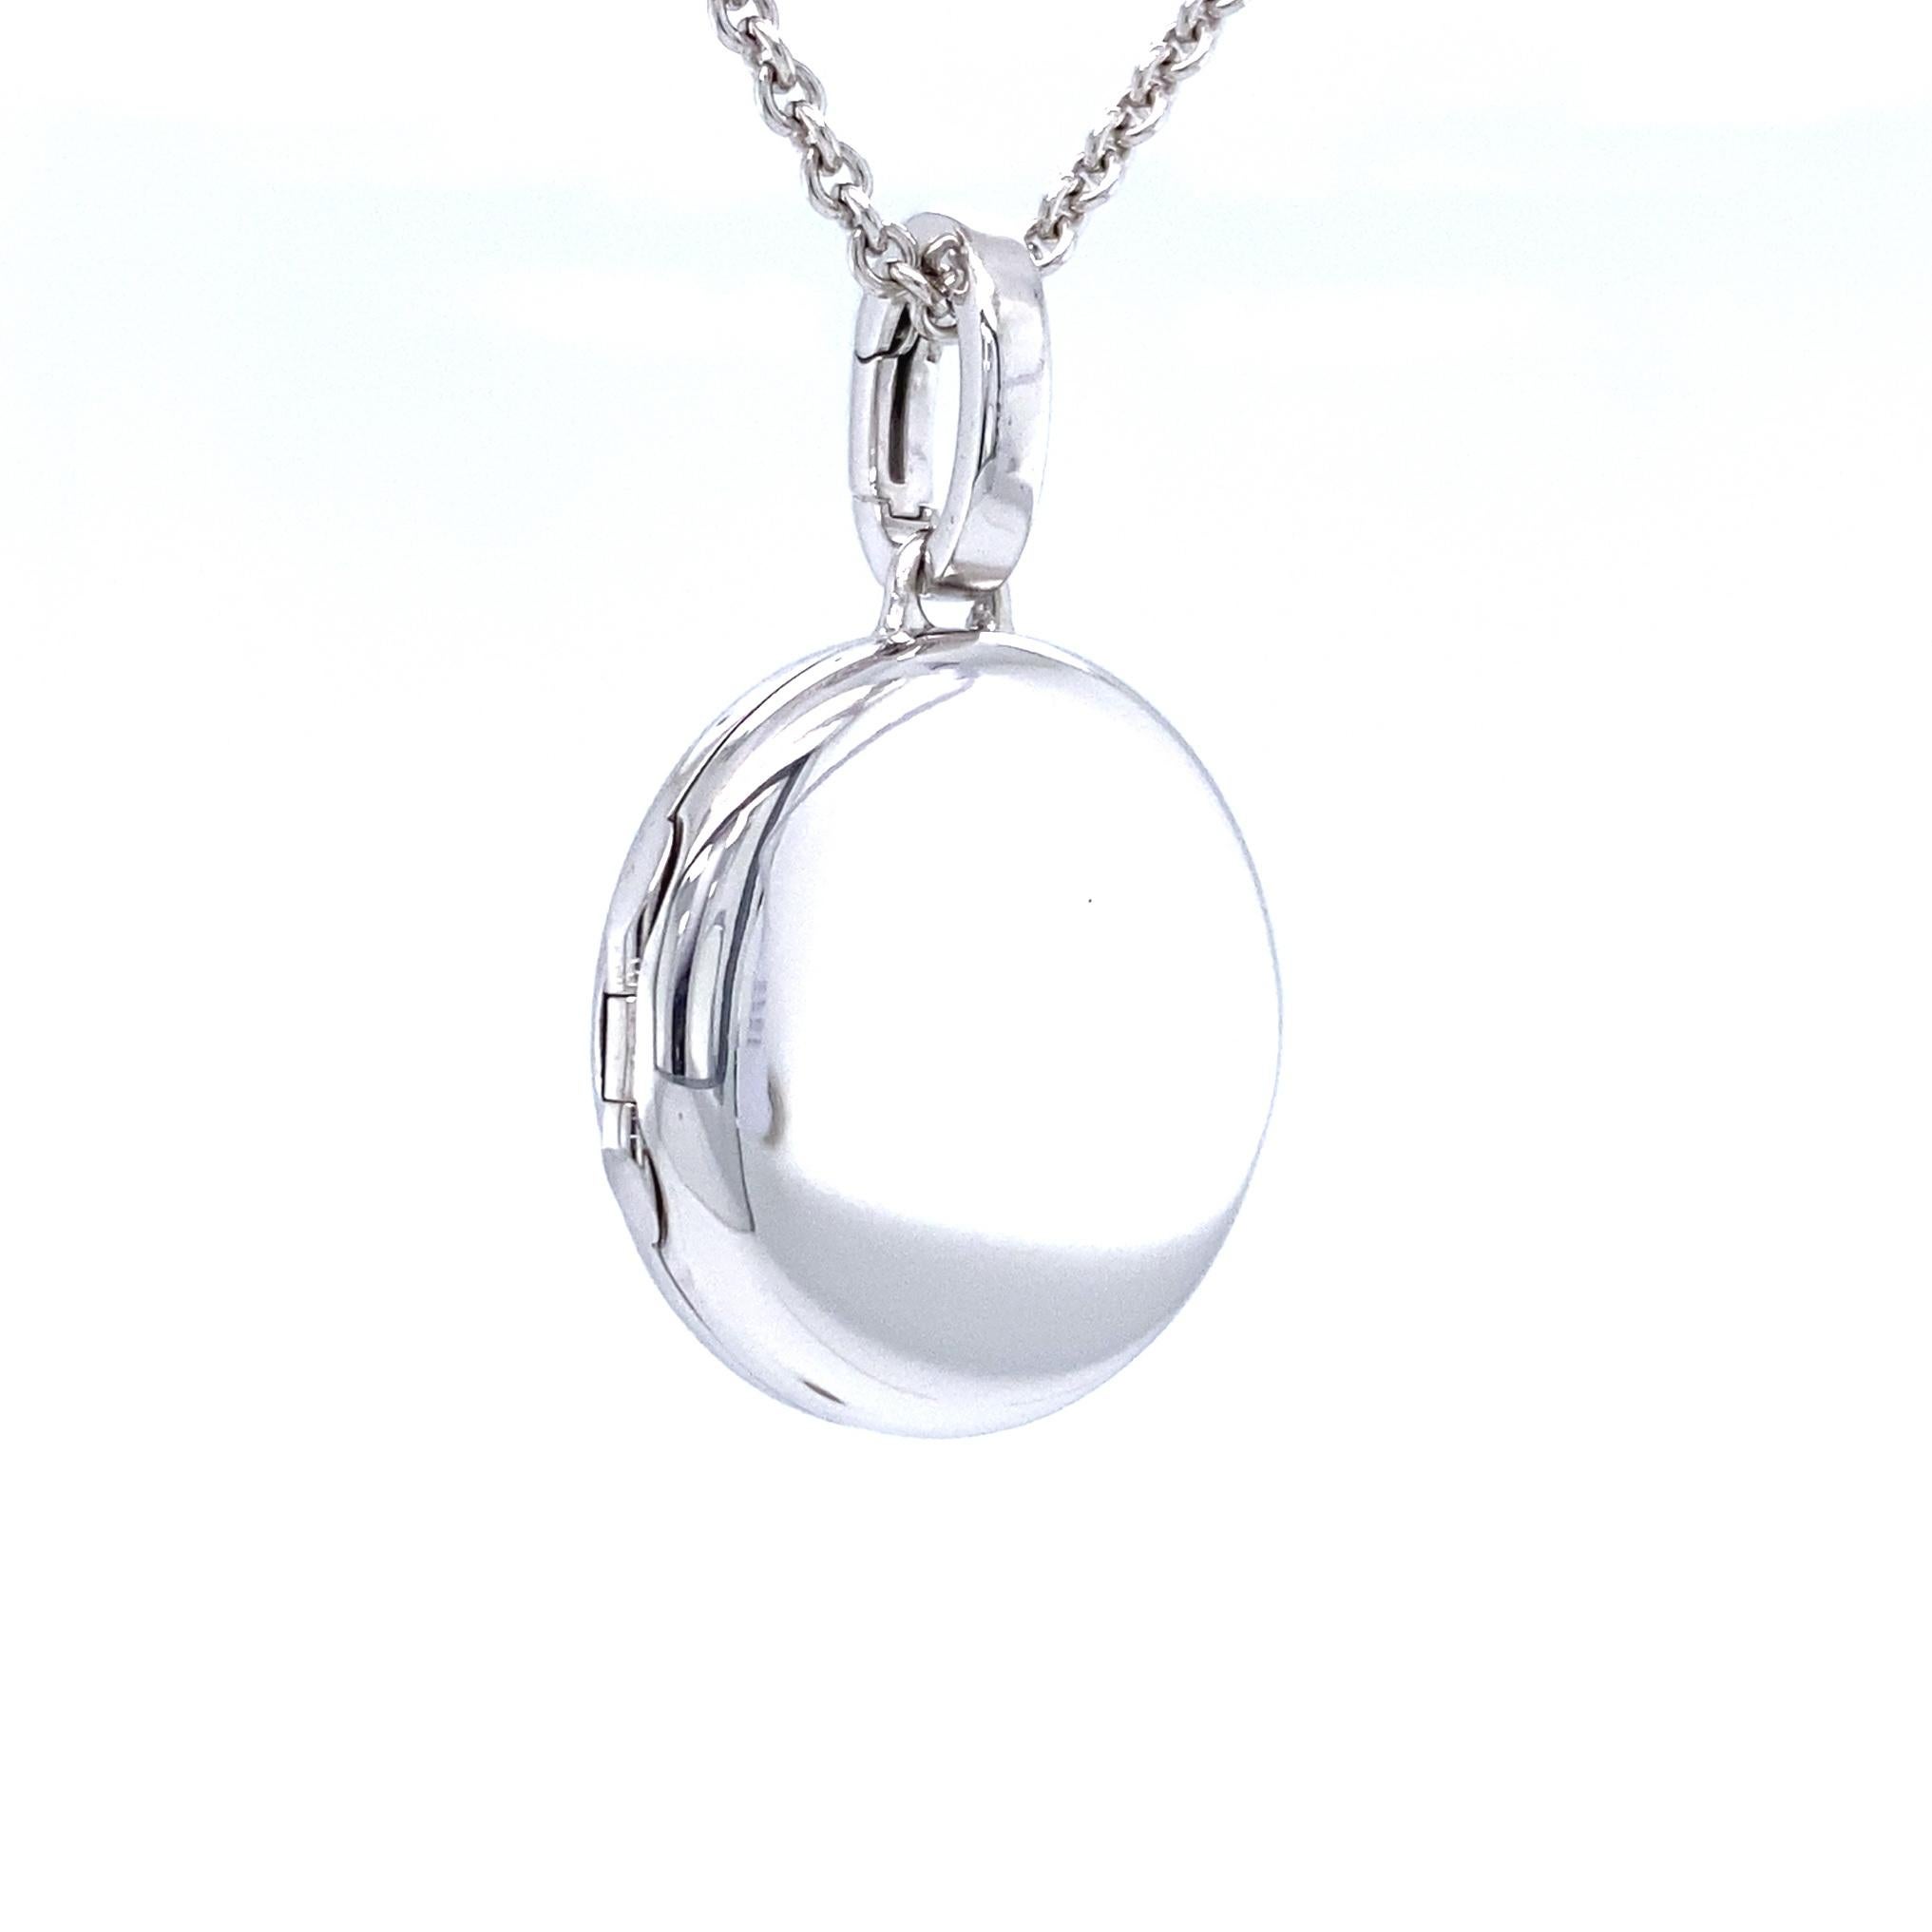 Women's Round Locket Pendant Necklace - 18k White Gold - Diameter 21.0 mm For Sale